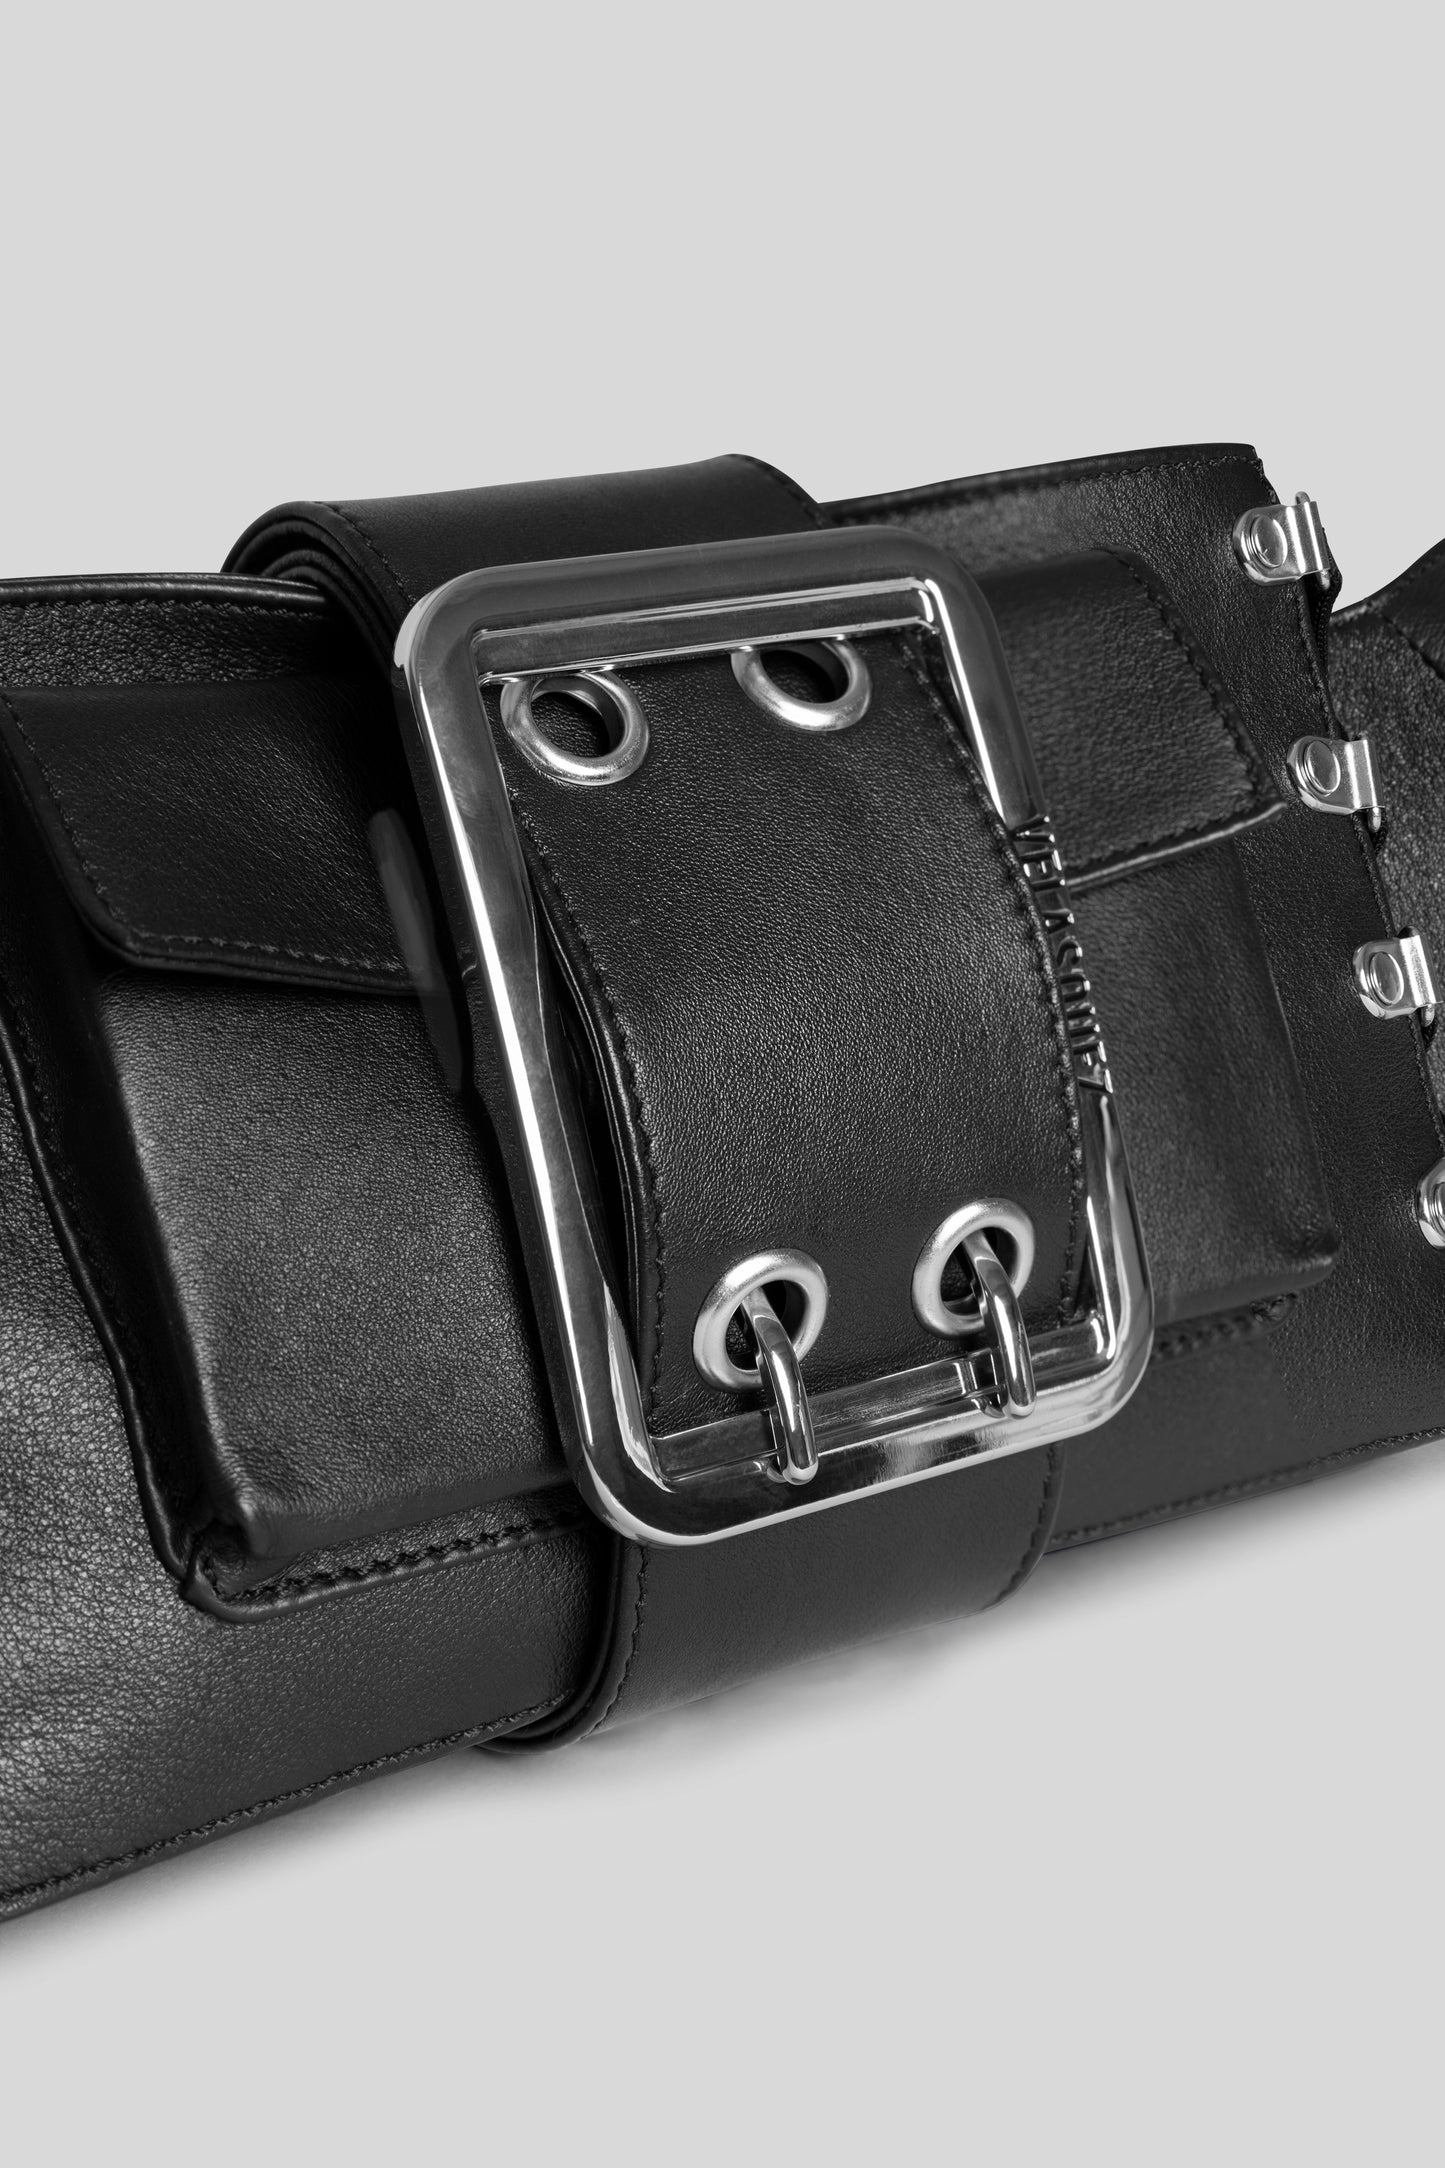 Upcycled Leather Crossbody Bag by Mateo Velasquez